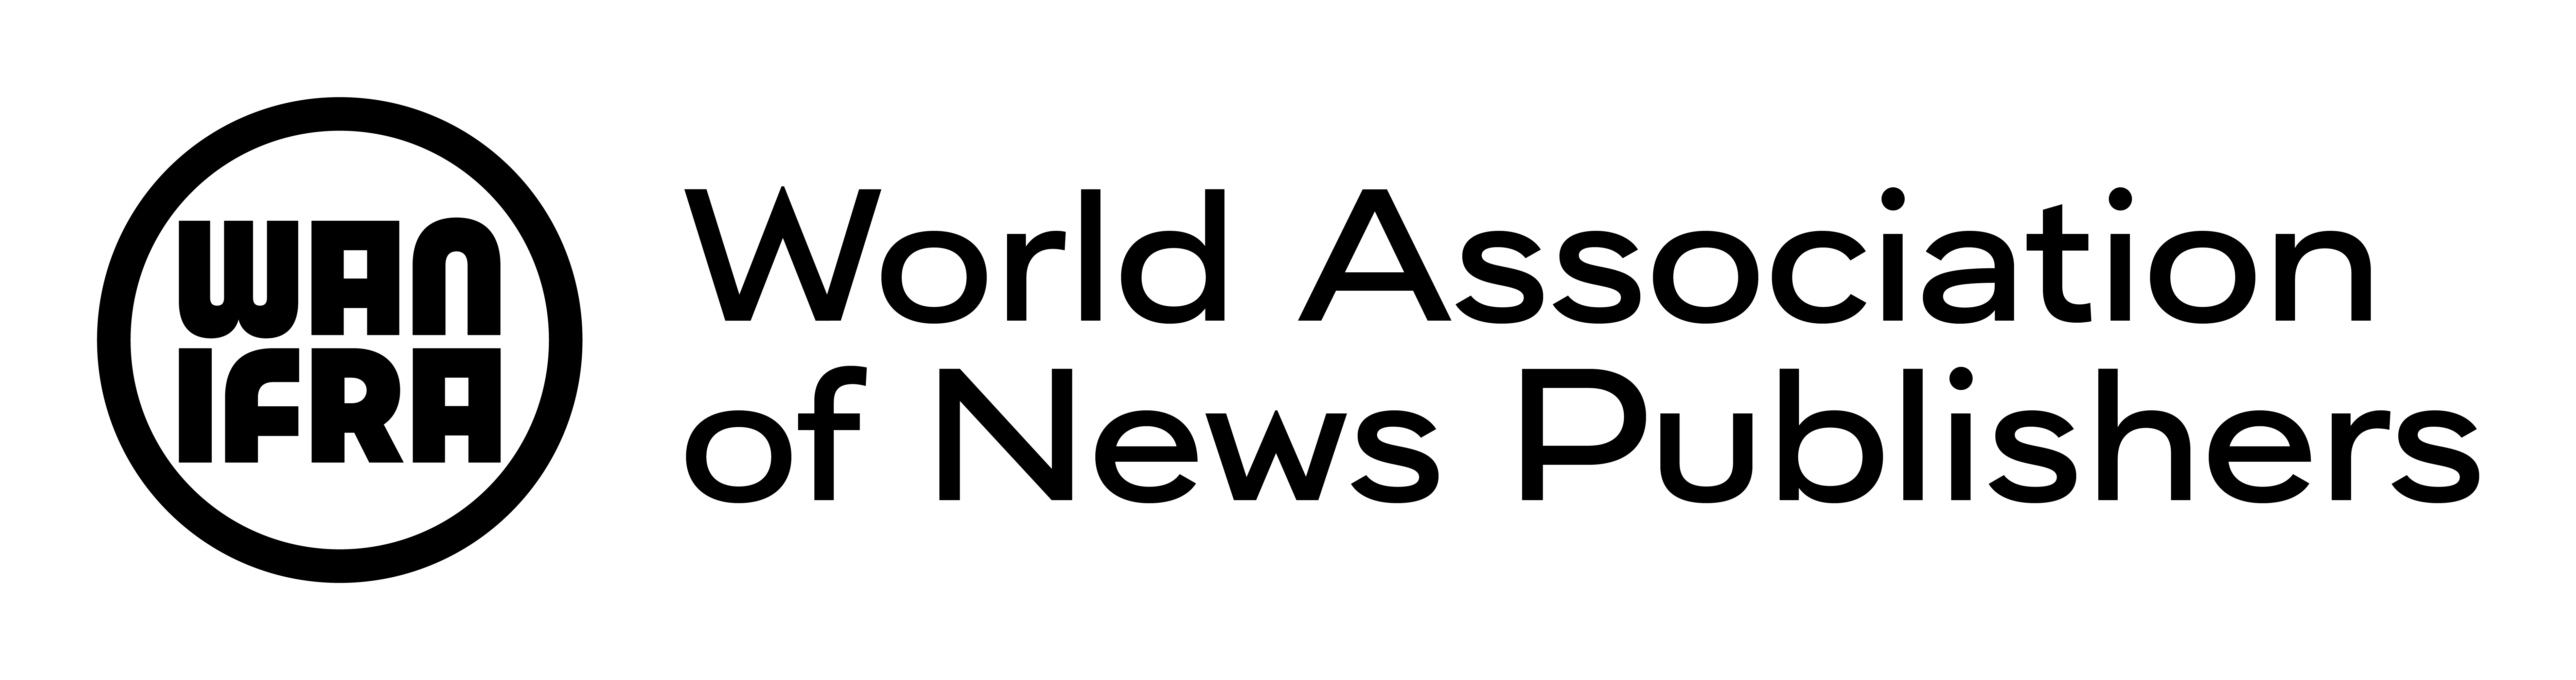 WAN-IFRA: World Association of News Publishers